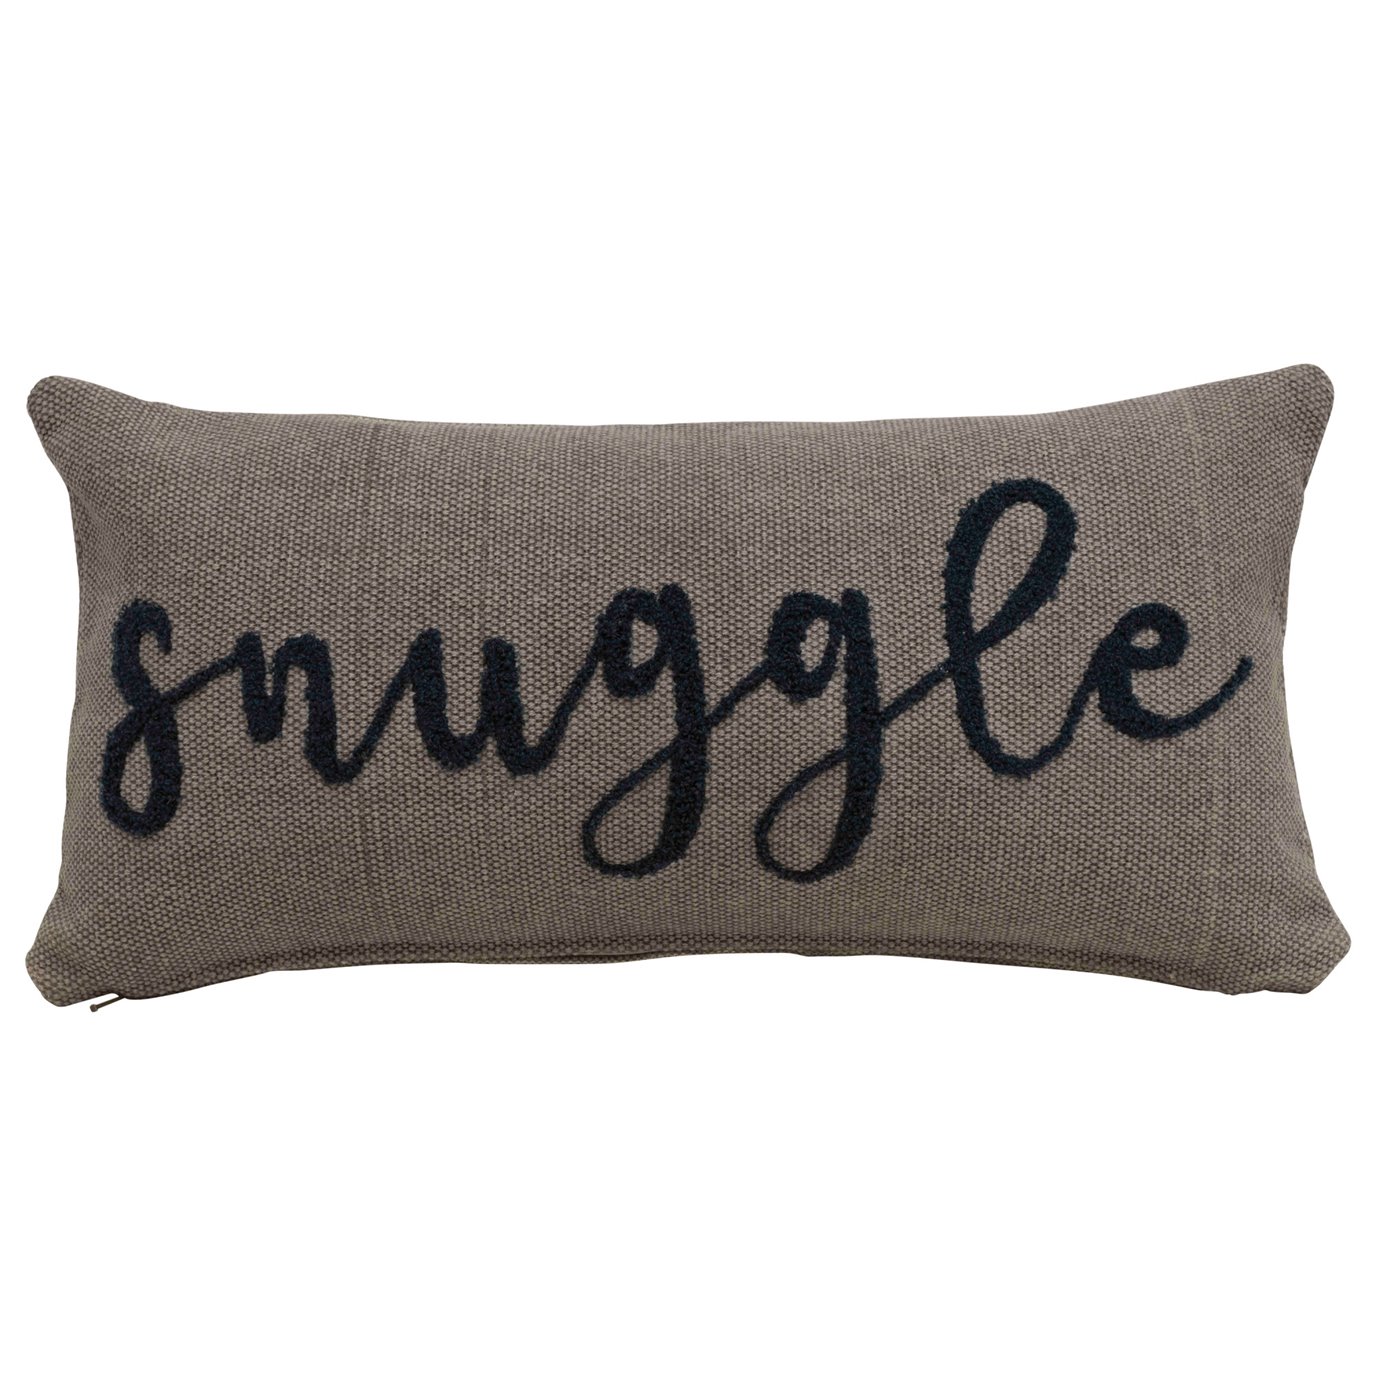 "Snuggle" Embroidered Rectangle Cotton Lumbar Pillow